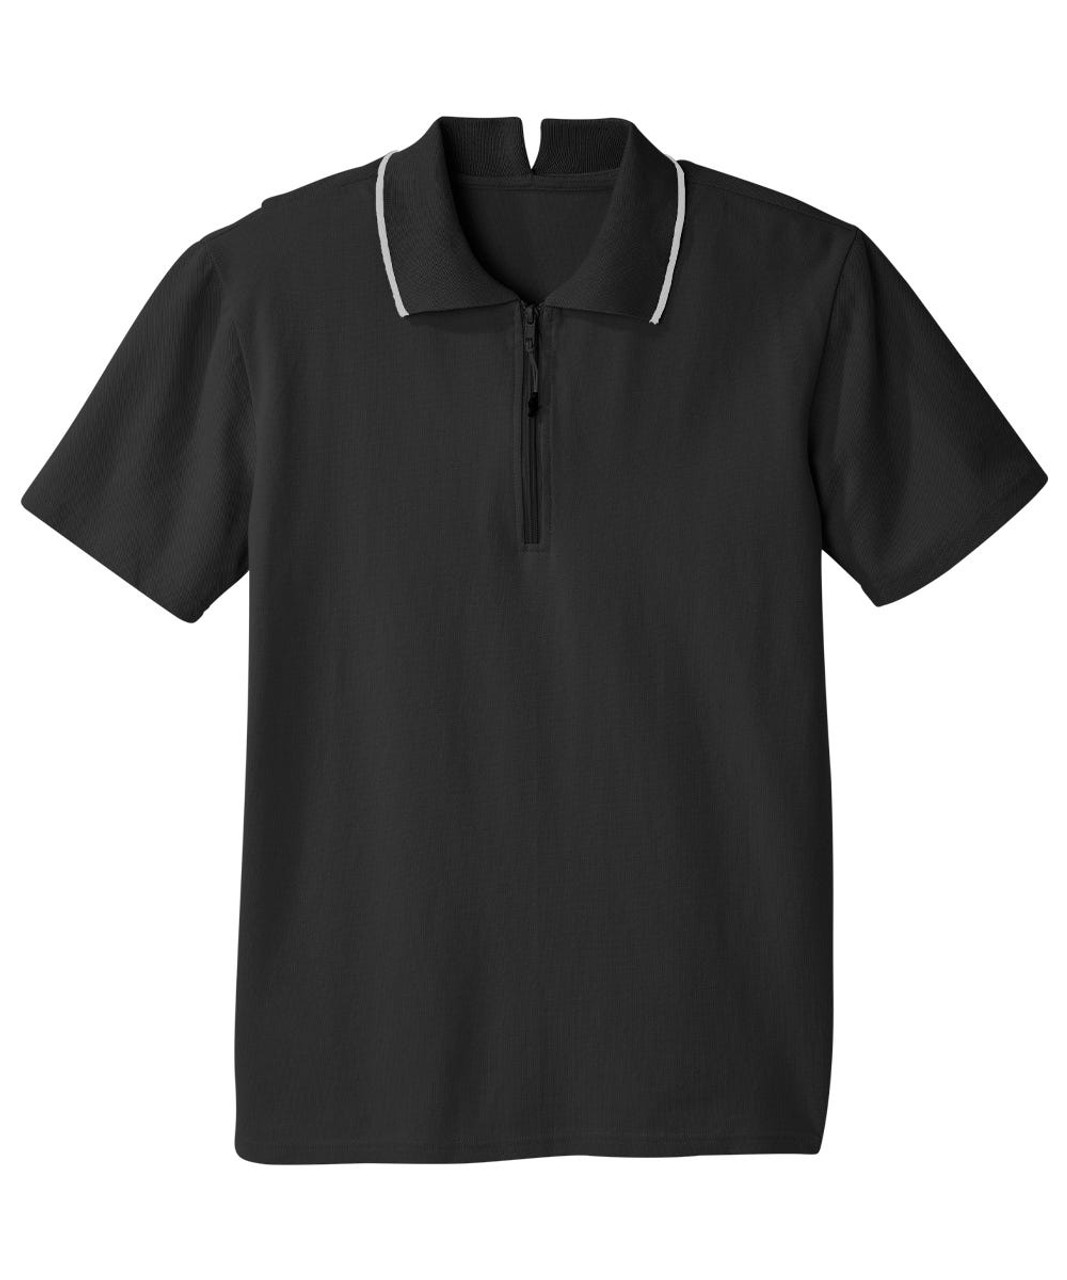 Silverts SV171 Senior Men's Adaptive Open Back Zip Polo Shirt Black, Size=2XL, SV171-SV2-2XL